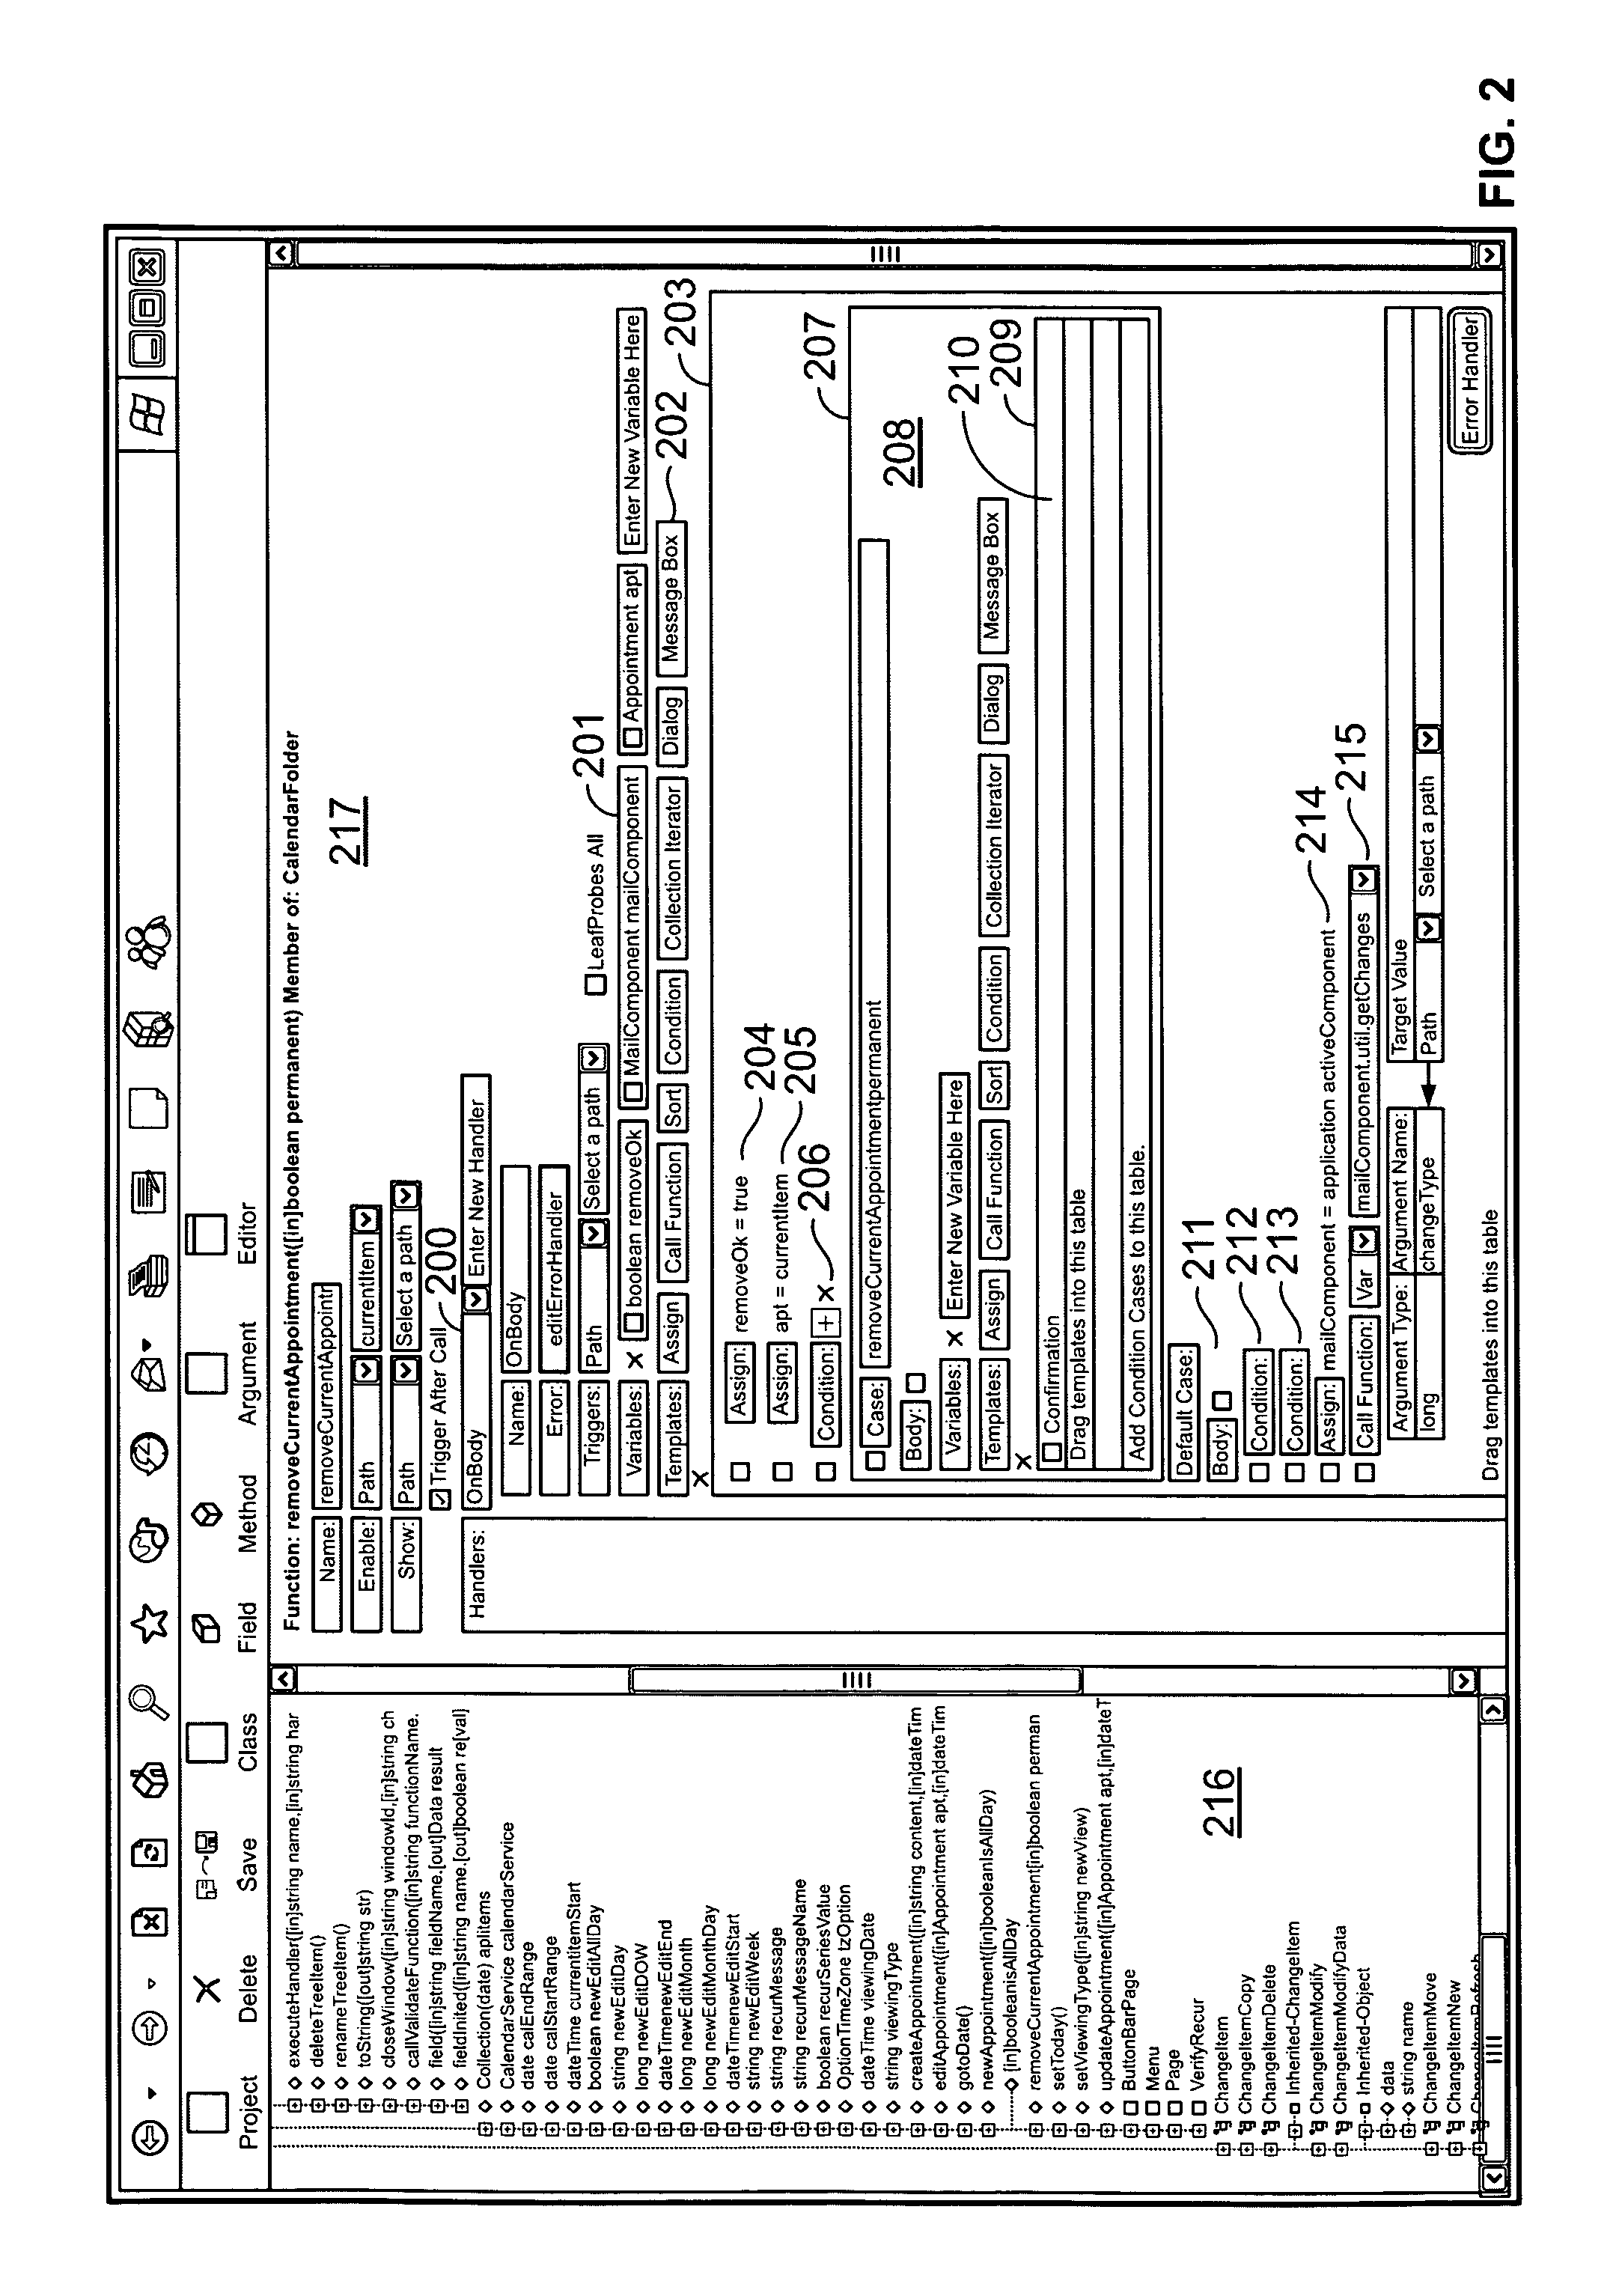 Declarative computer programming language method and system